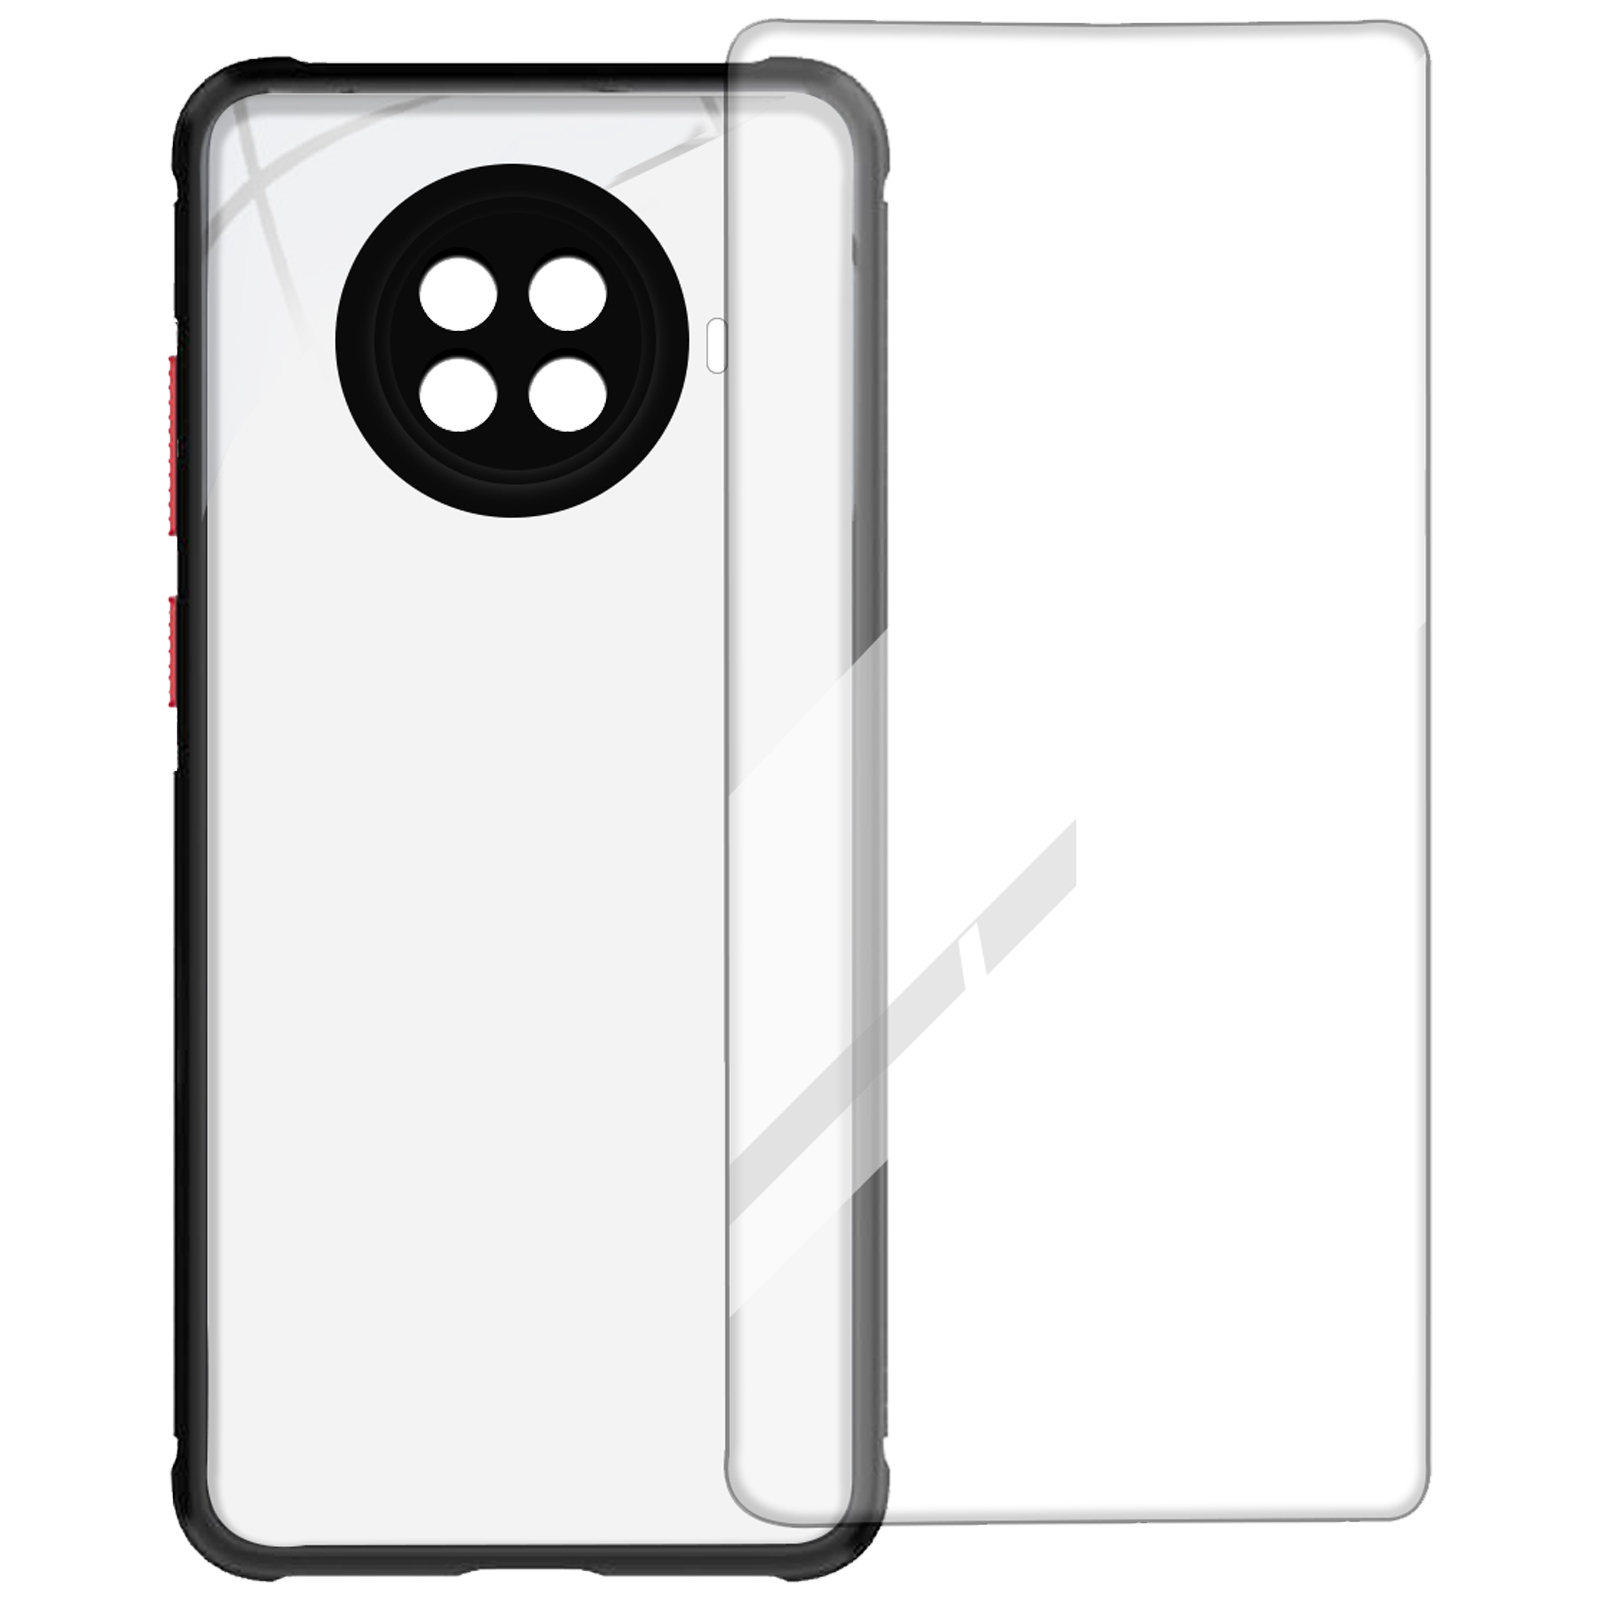 Arrow Hybrid Back Case and Screen Protector Bundle For Xiaomi Mi 10i (Ultra Transparent Visibility, AR-1013, Black)_1